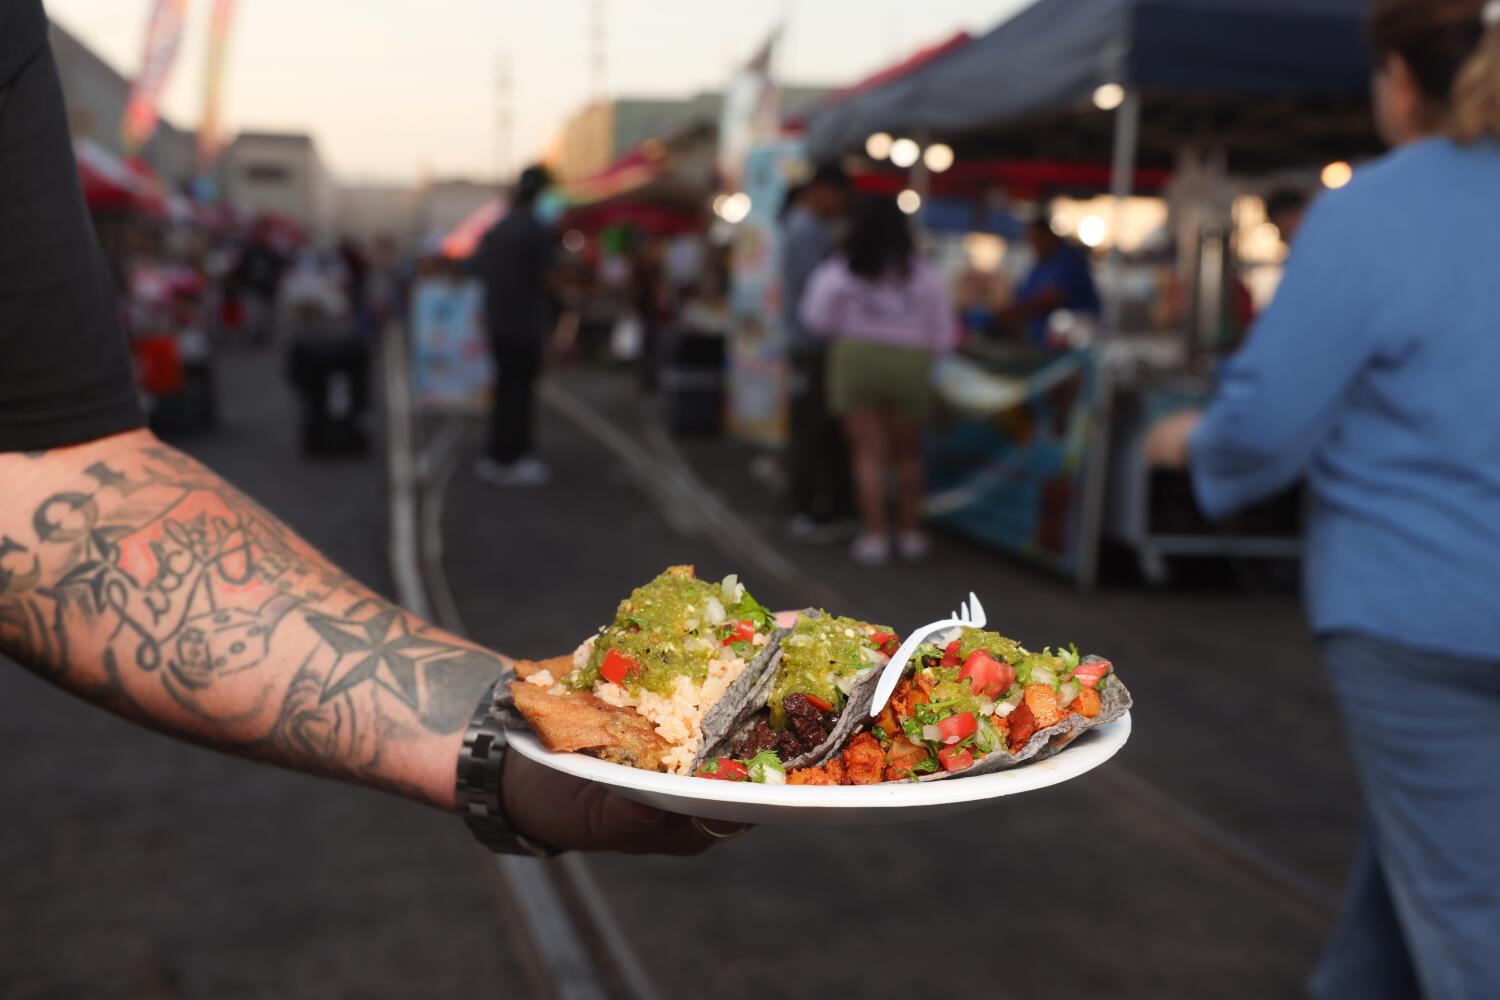 How L.A. reached peak taco